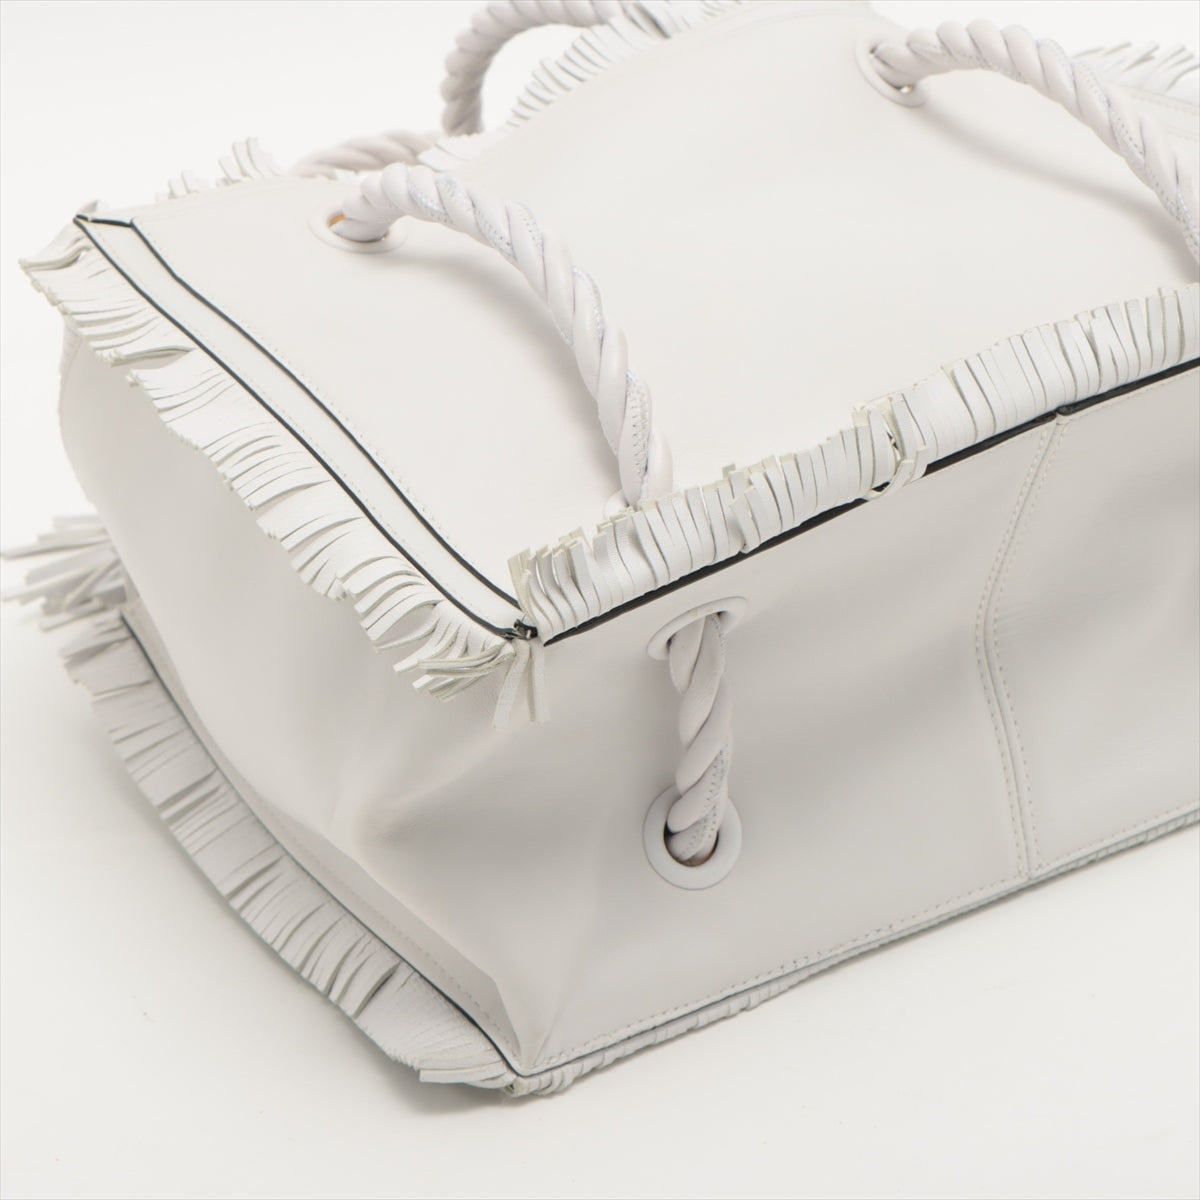 Valentino Garavani Leather Tote Bag White